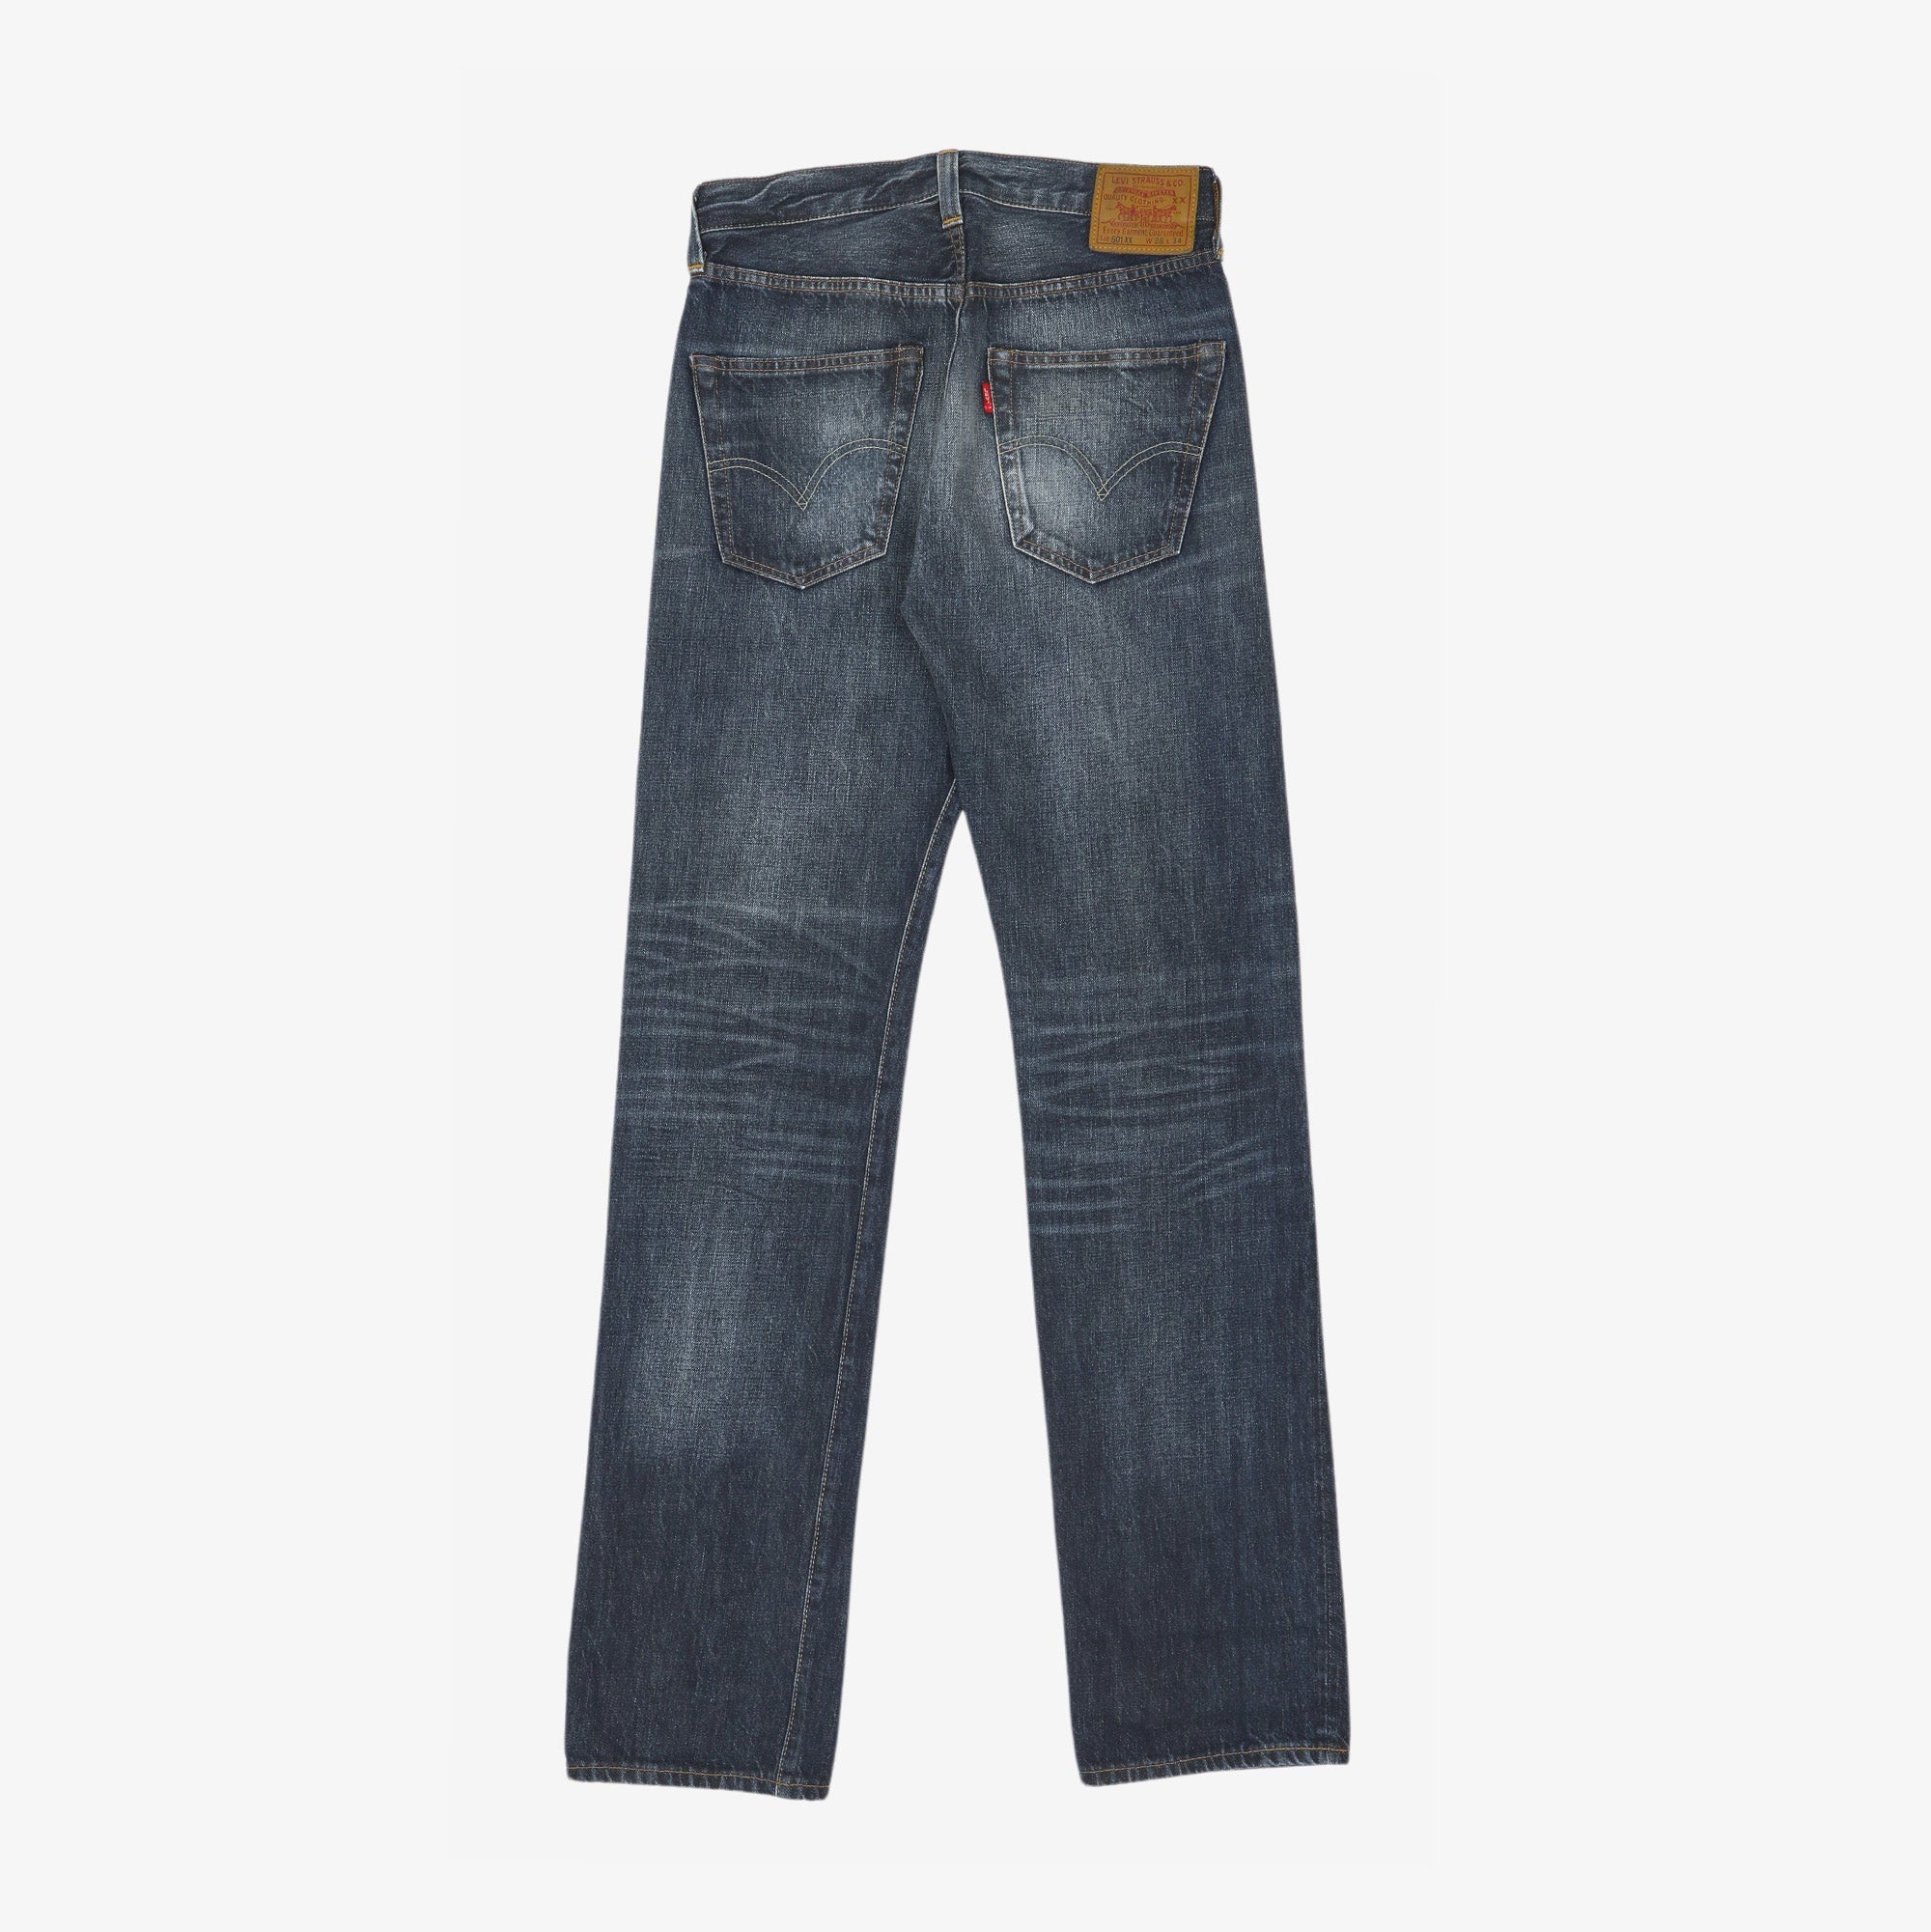 1947 Lot 501XX Jeans (USA)